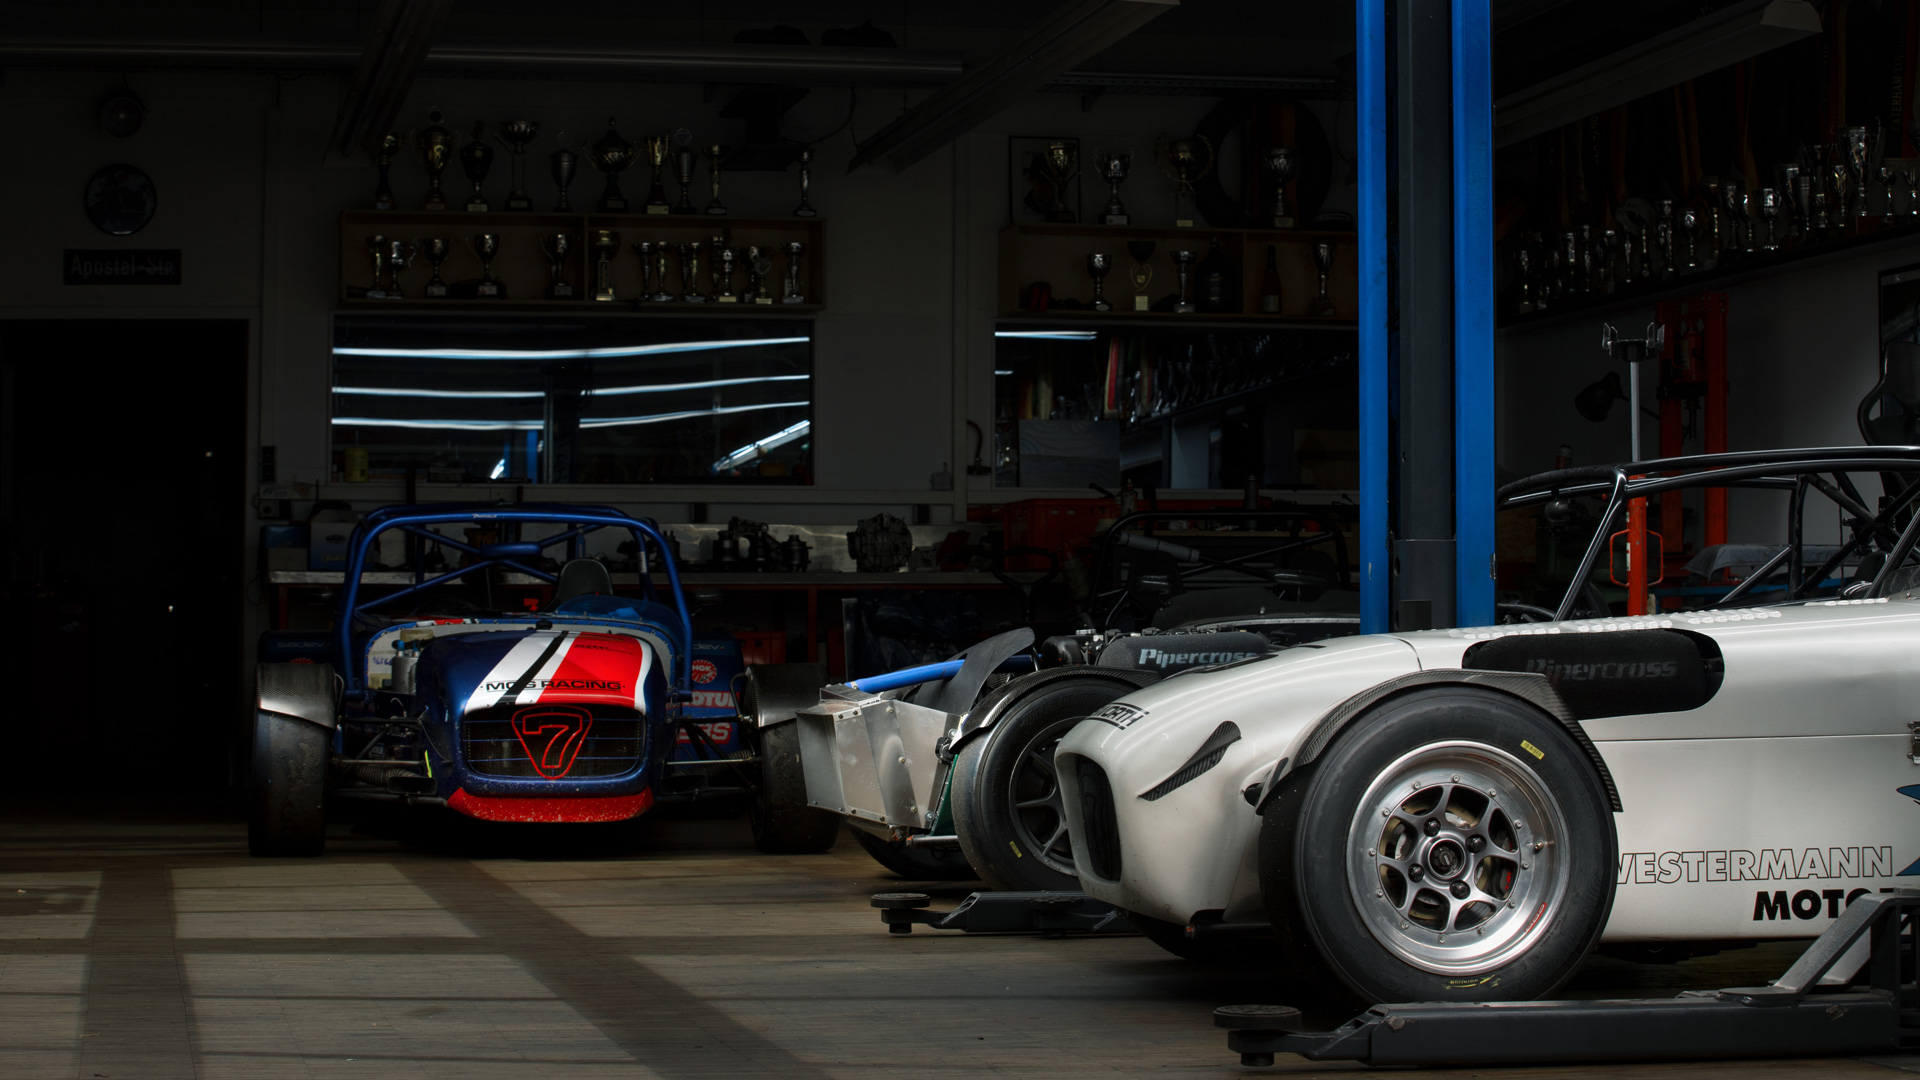 Workshop Westermann Motorsport